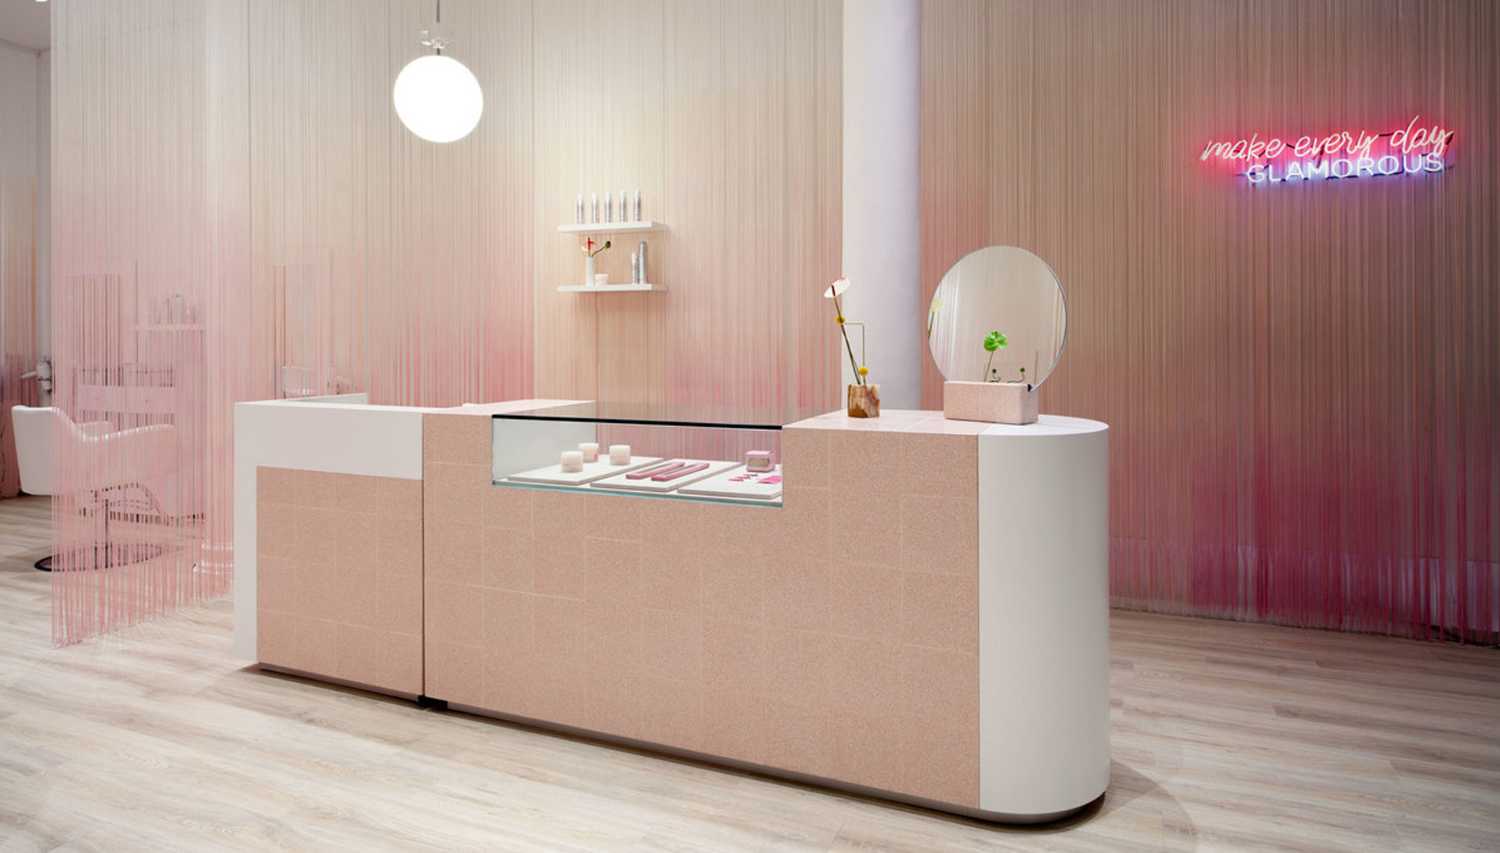 Glam Seamless: magasin élégant rose et blanc à Soho